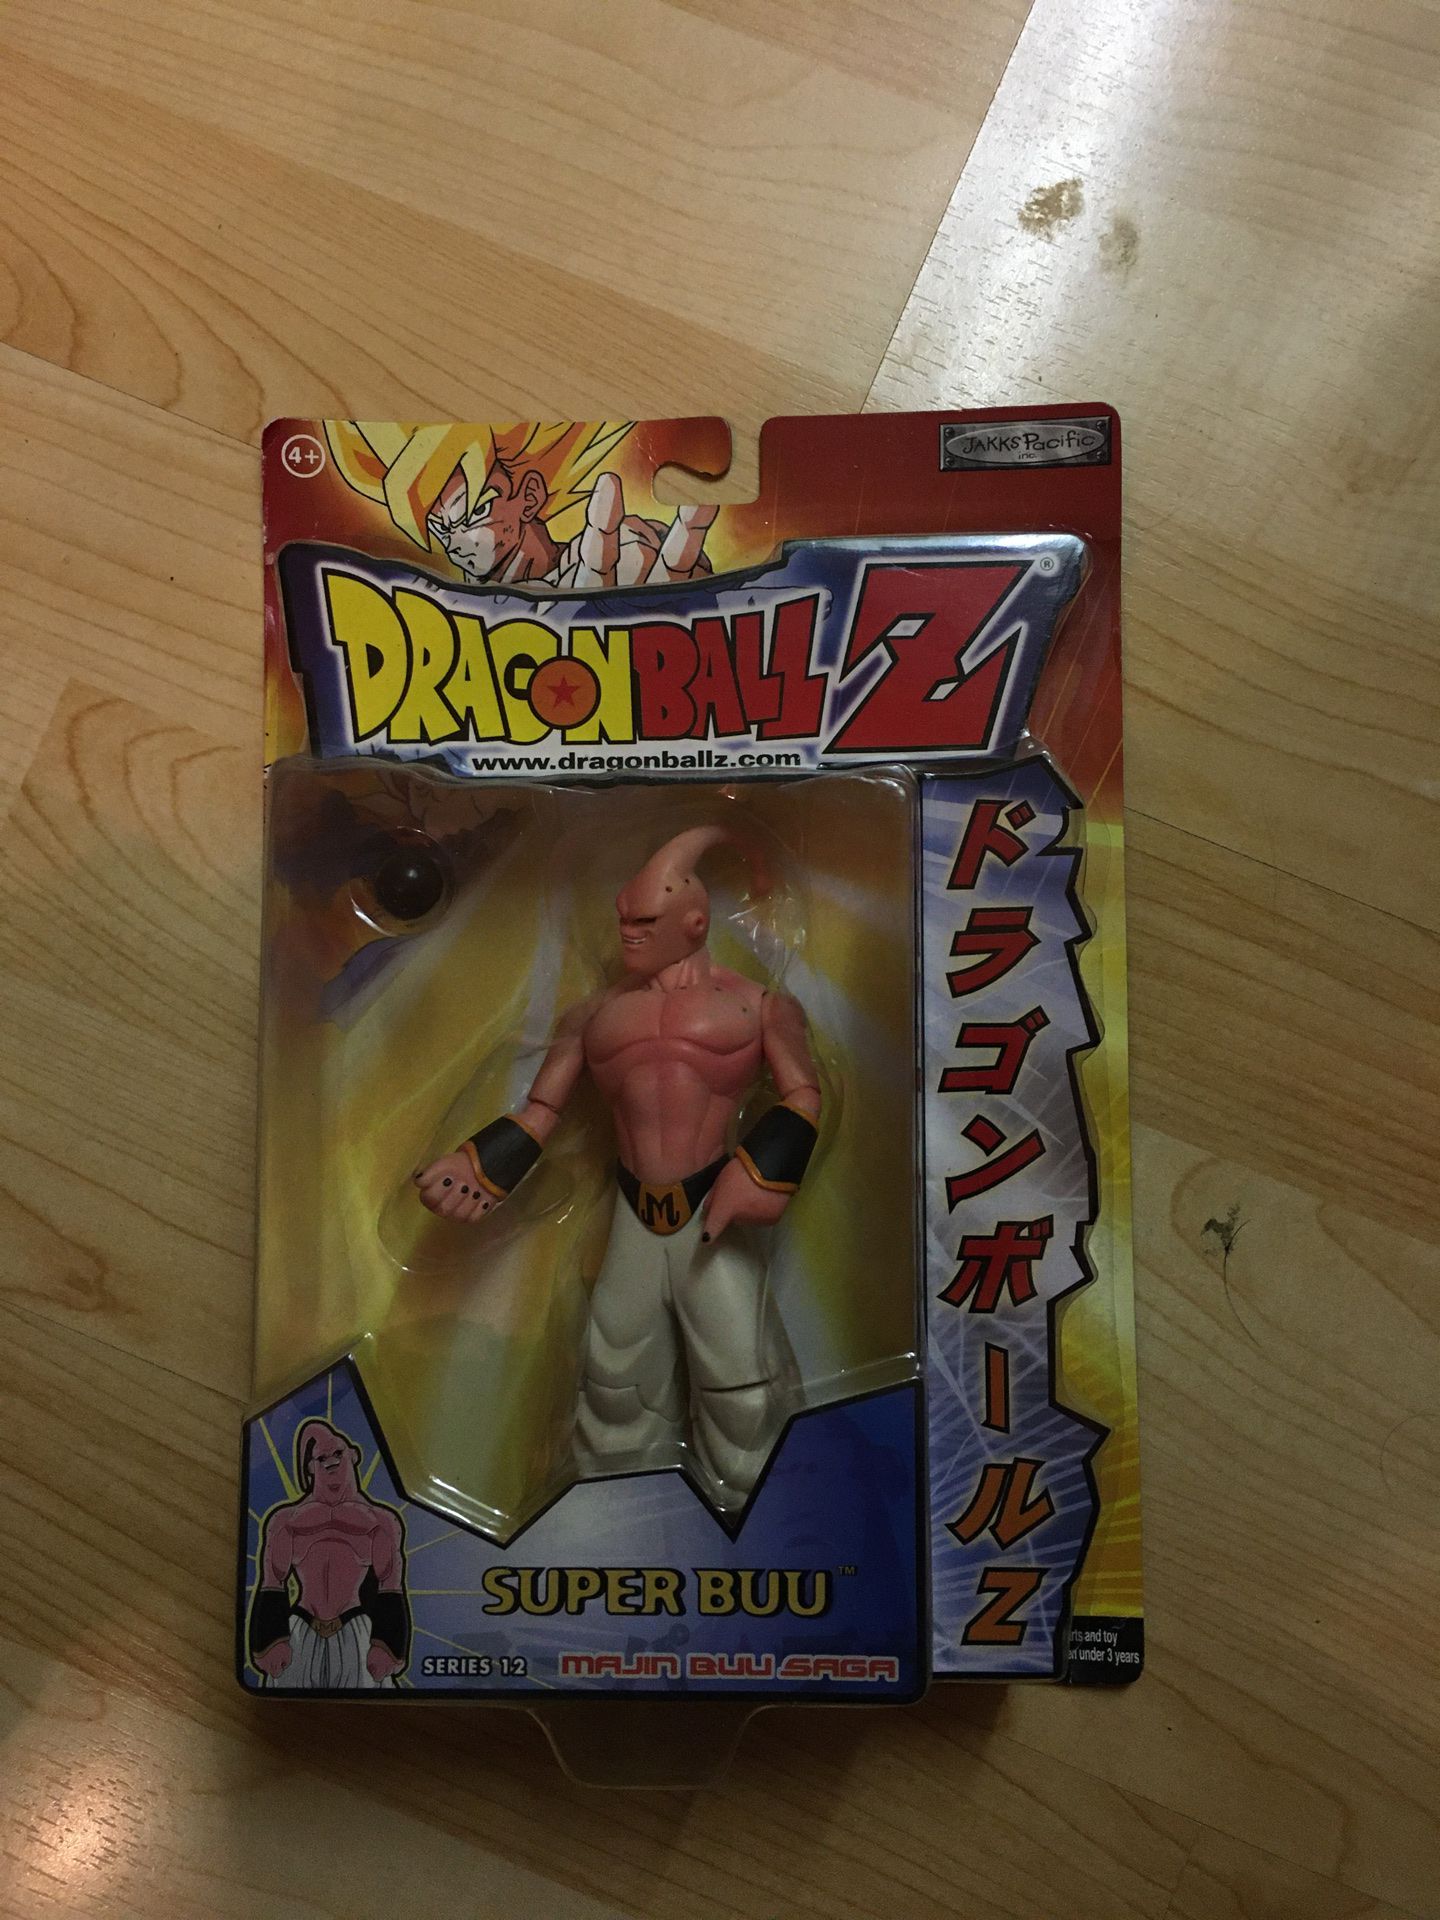 Dragon ball Z super buu series 12 action figure majin buu saga 2003 jakks pacific